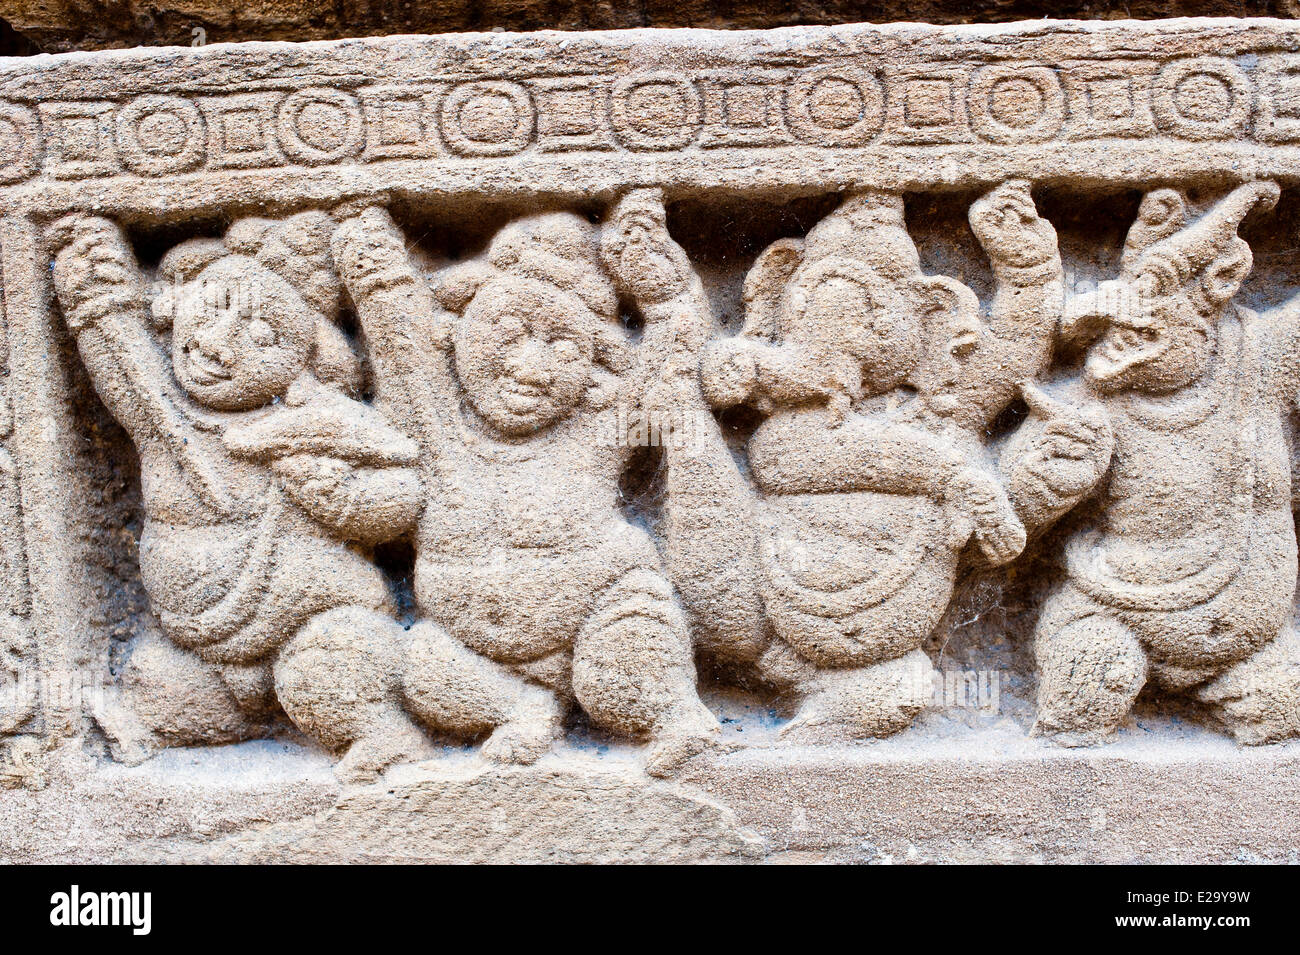 India, Tamil Nadu State, Kanchipuram, the 8th century Kailasanatha temple built by the Pallava and dedicated to Shiva Stock Photo